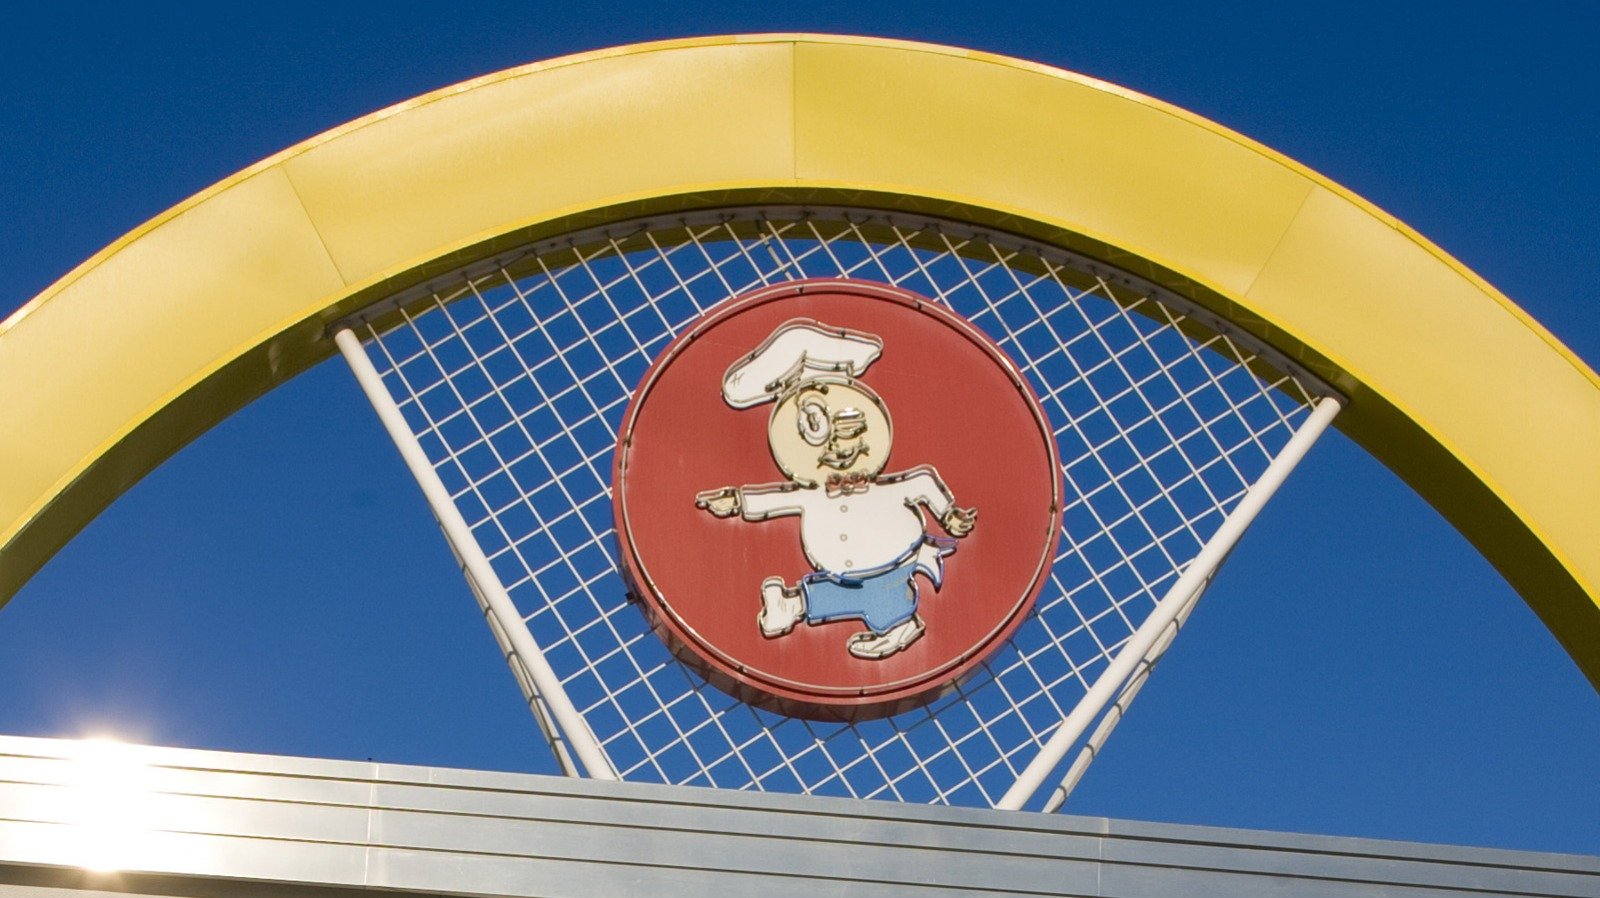 Whatever Happened To McDonald's First Mascot, Speedee?